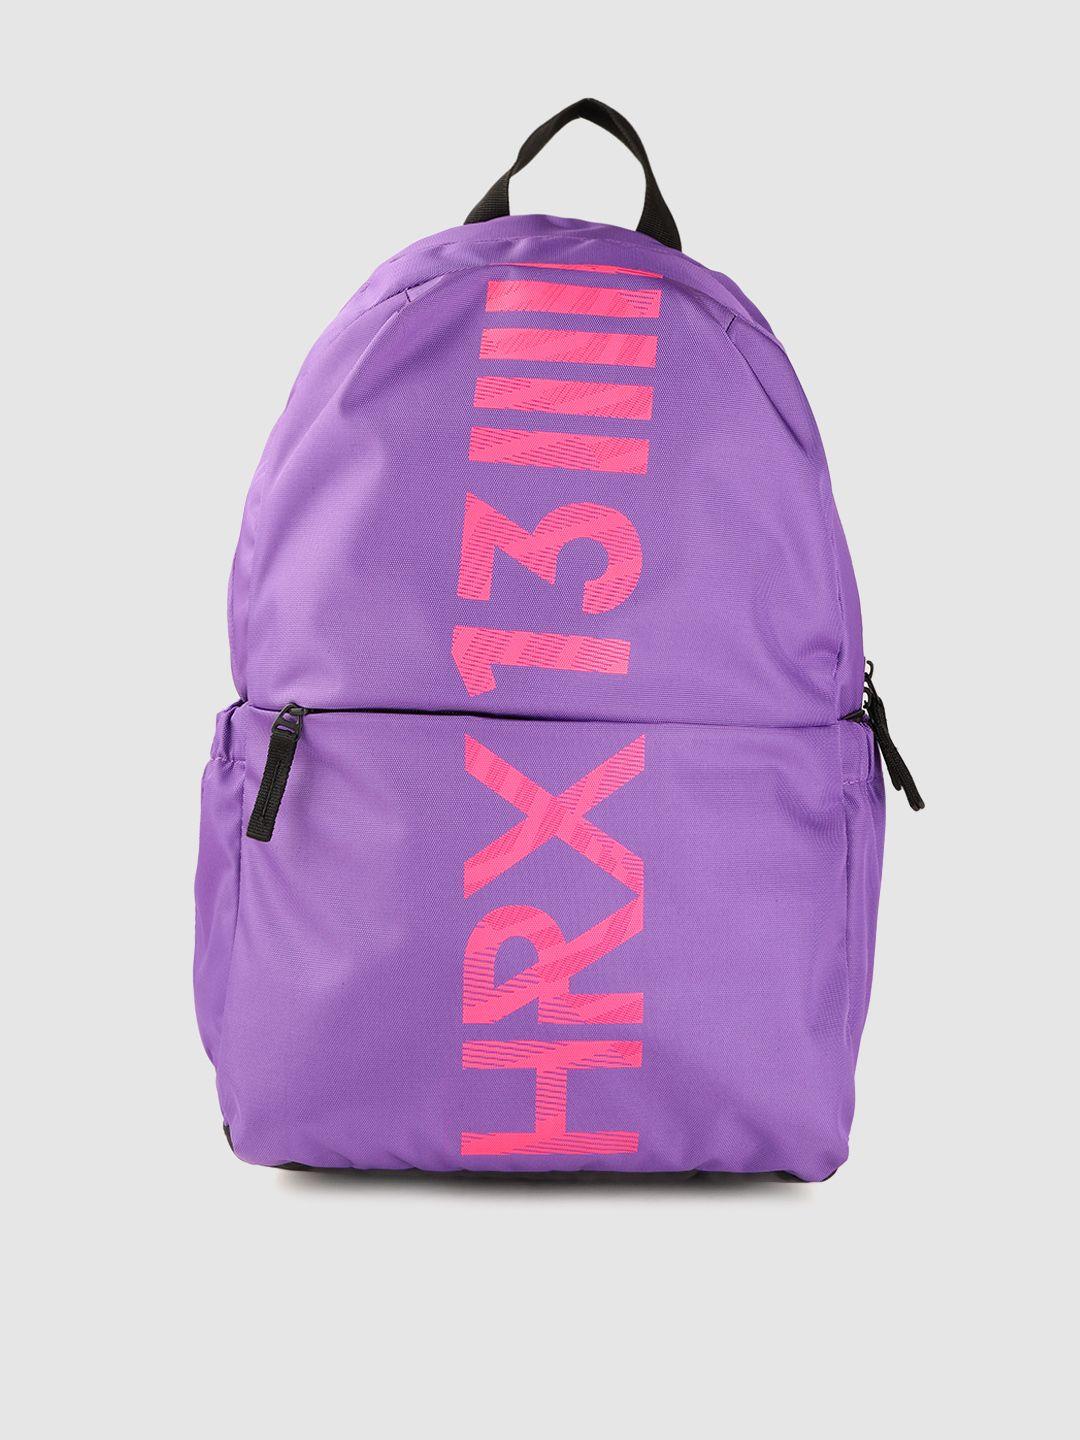 hrx-by-hrithik-roshan-unisex-purple-&-pink-brand-logo-print-15-inch-laptop-backpack